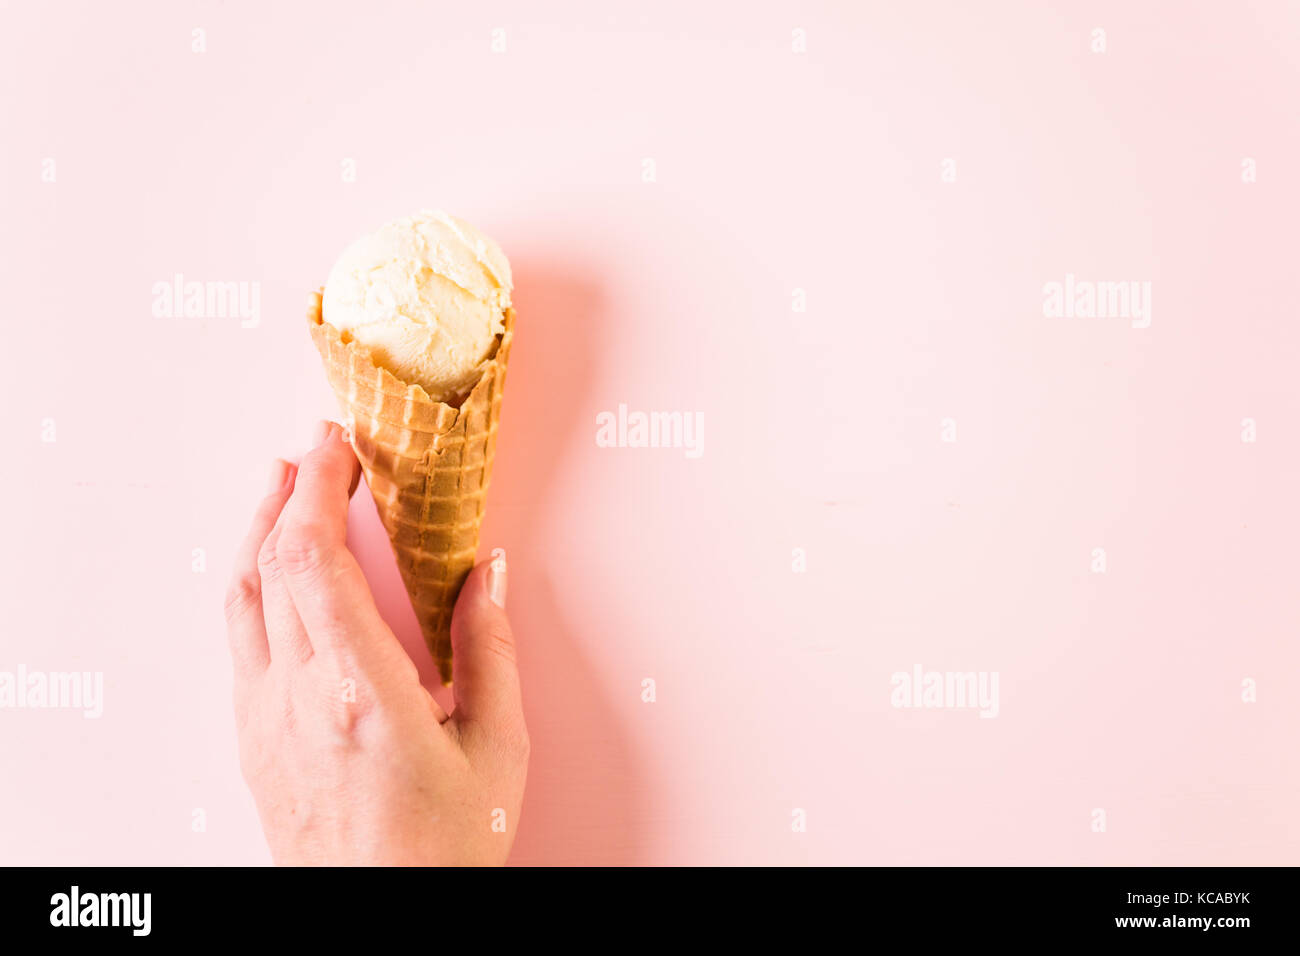 Ice cream scoops with cone stock photo. Image of vanilla - 20015318